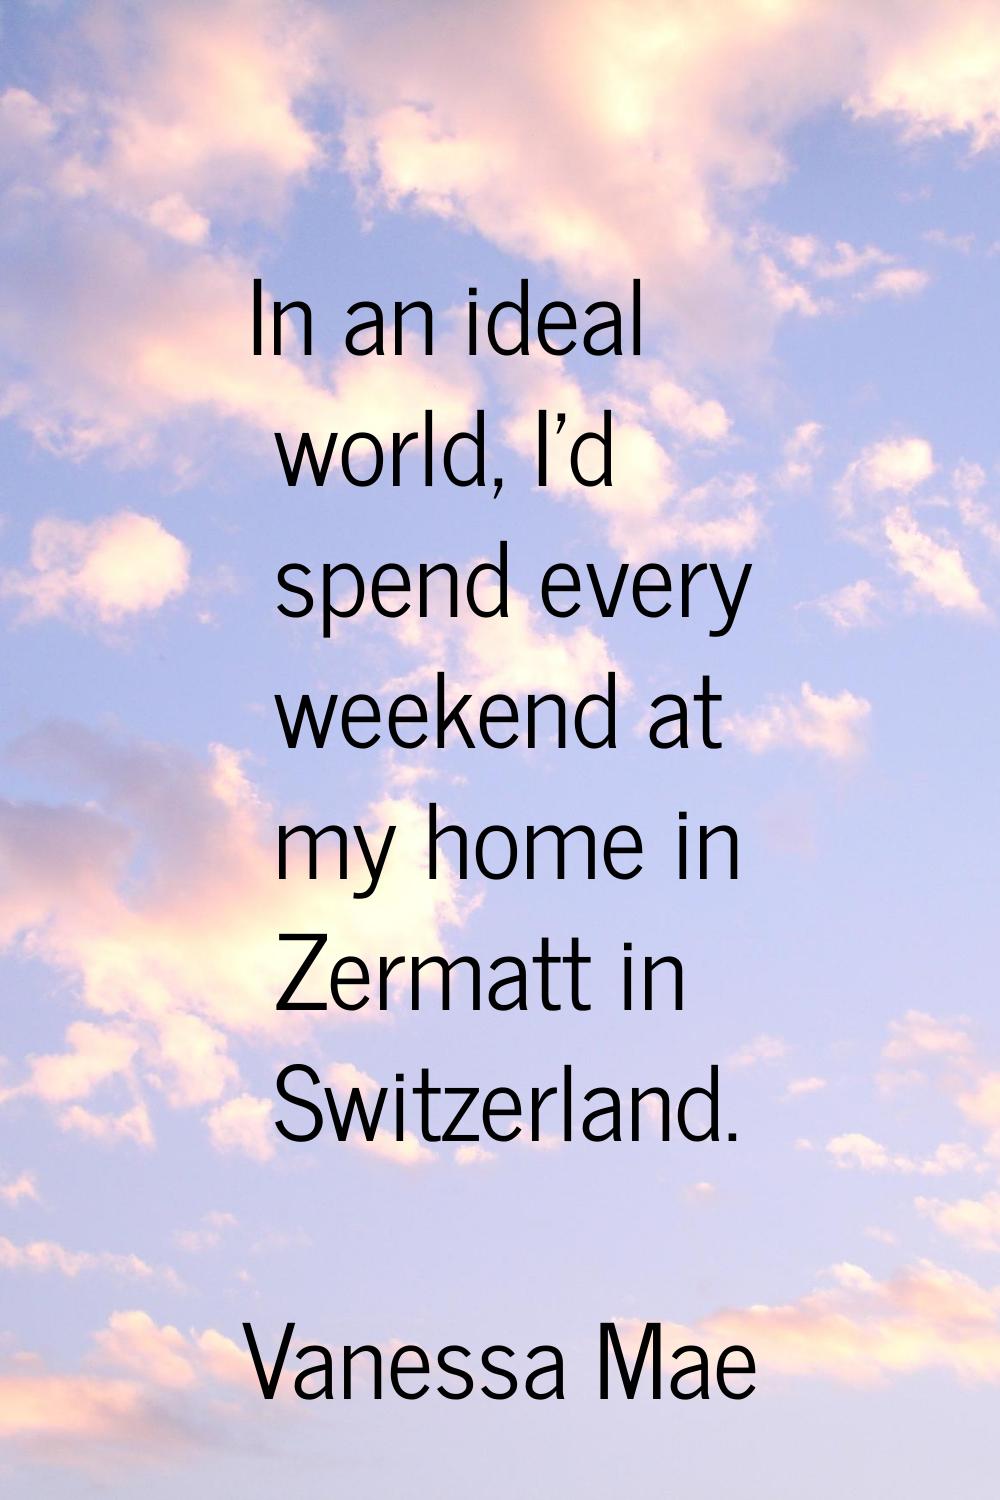 In an ideal world, I'd spend every weekend at my home in Zermatt in Switzerland.